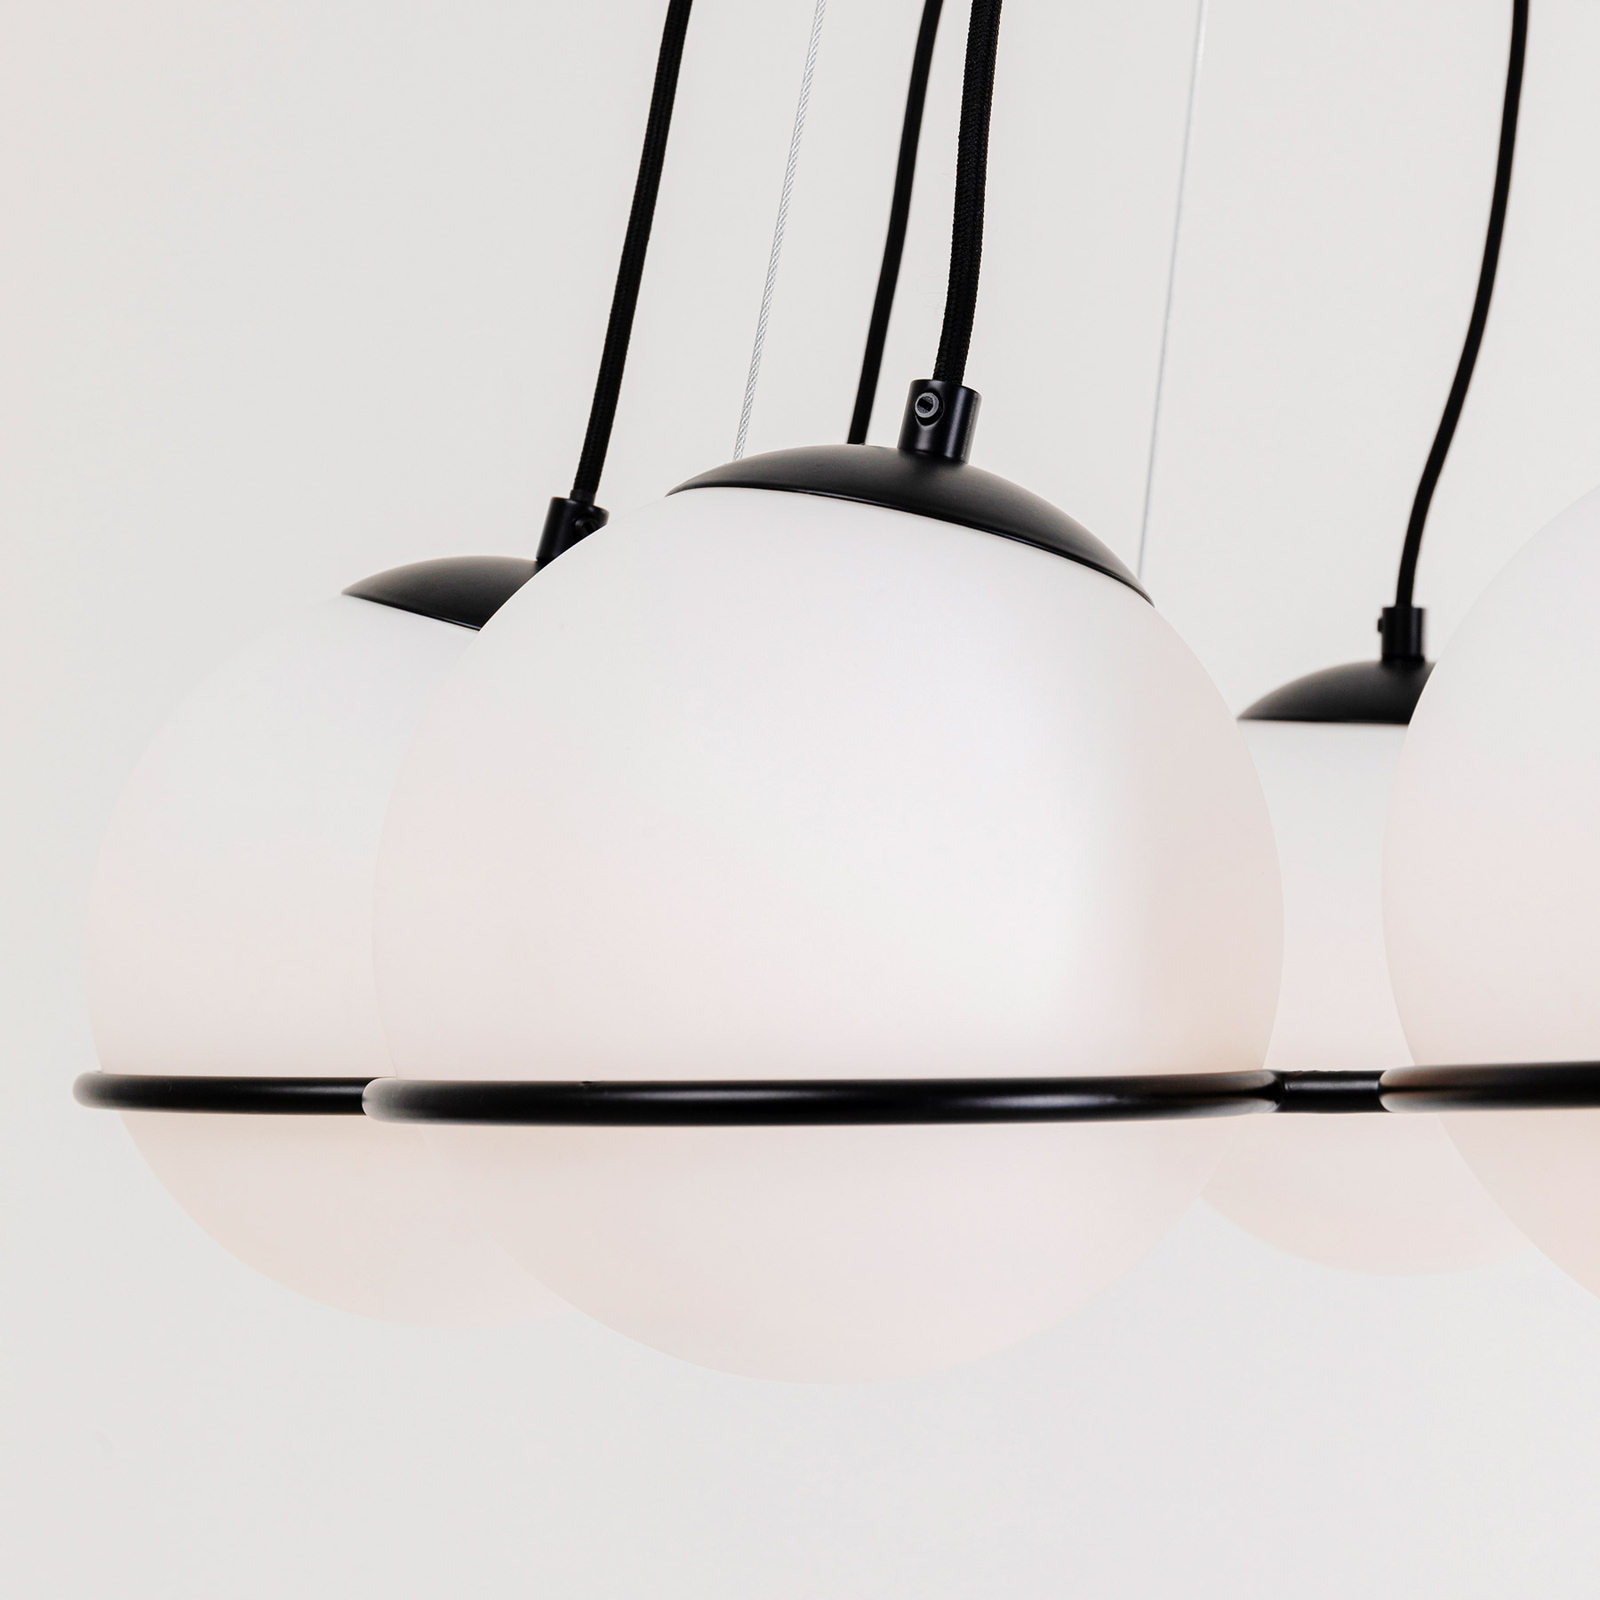 Kare Globes hanglamp in wit en zwart